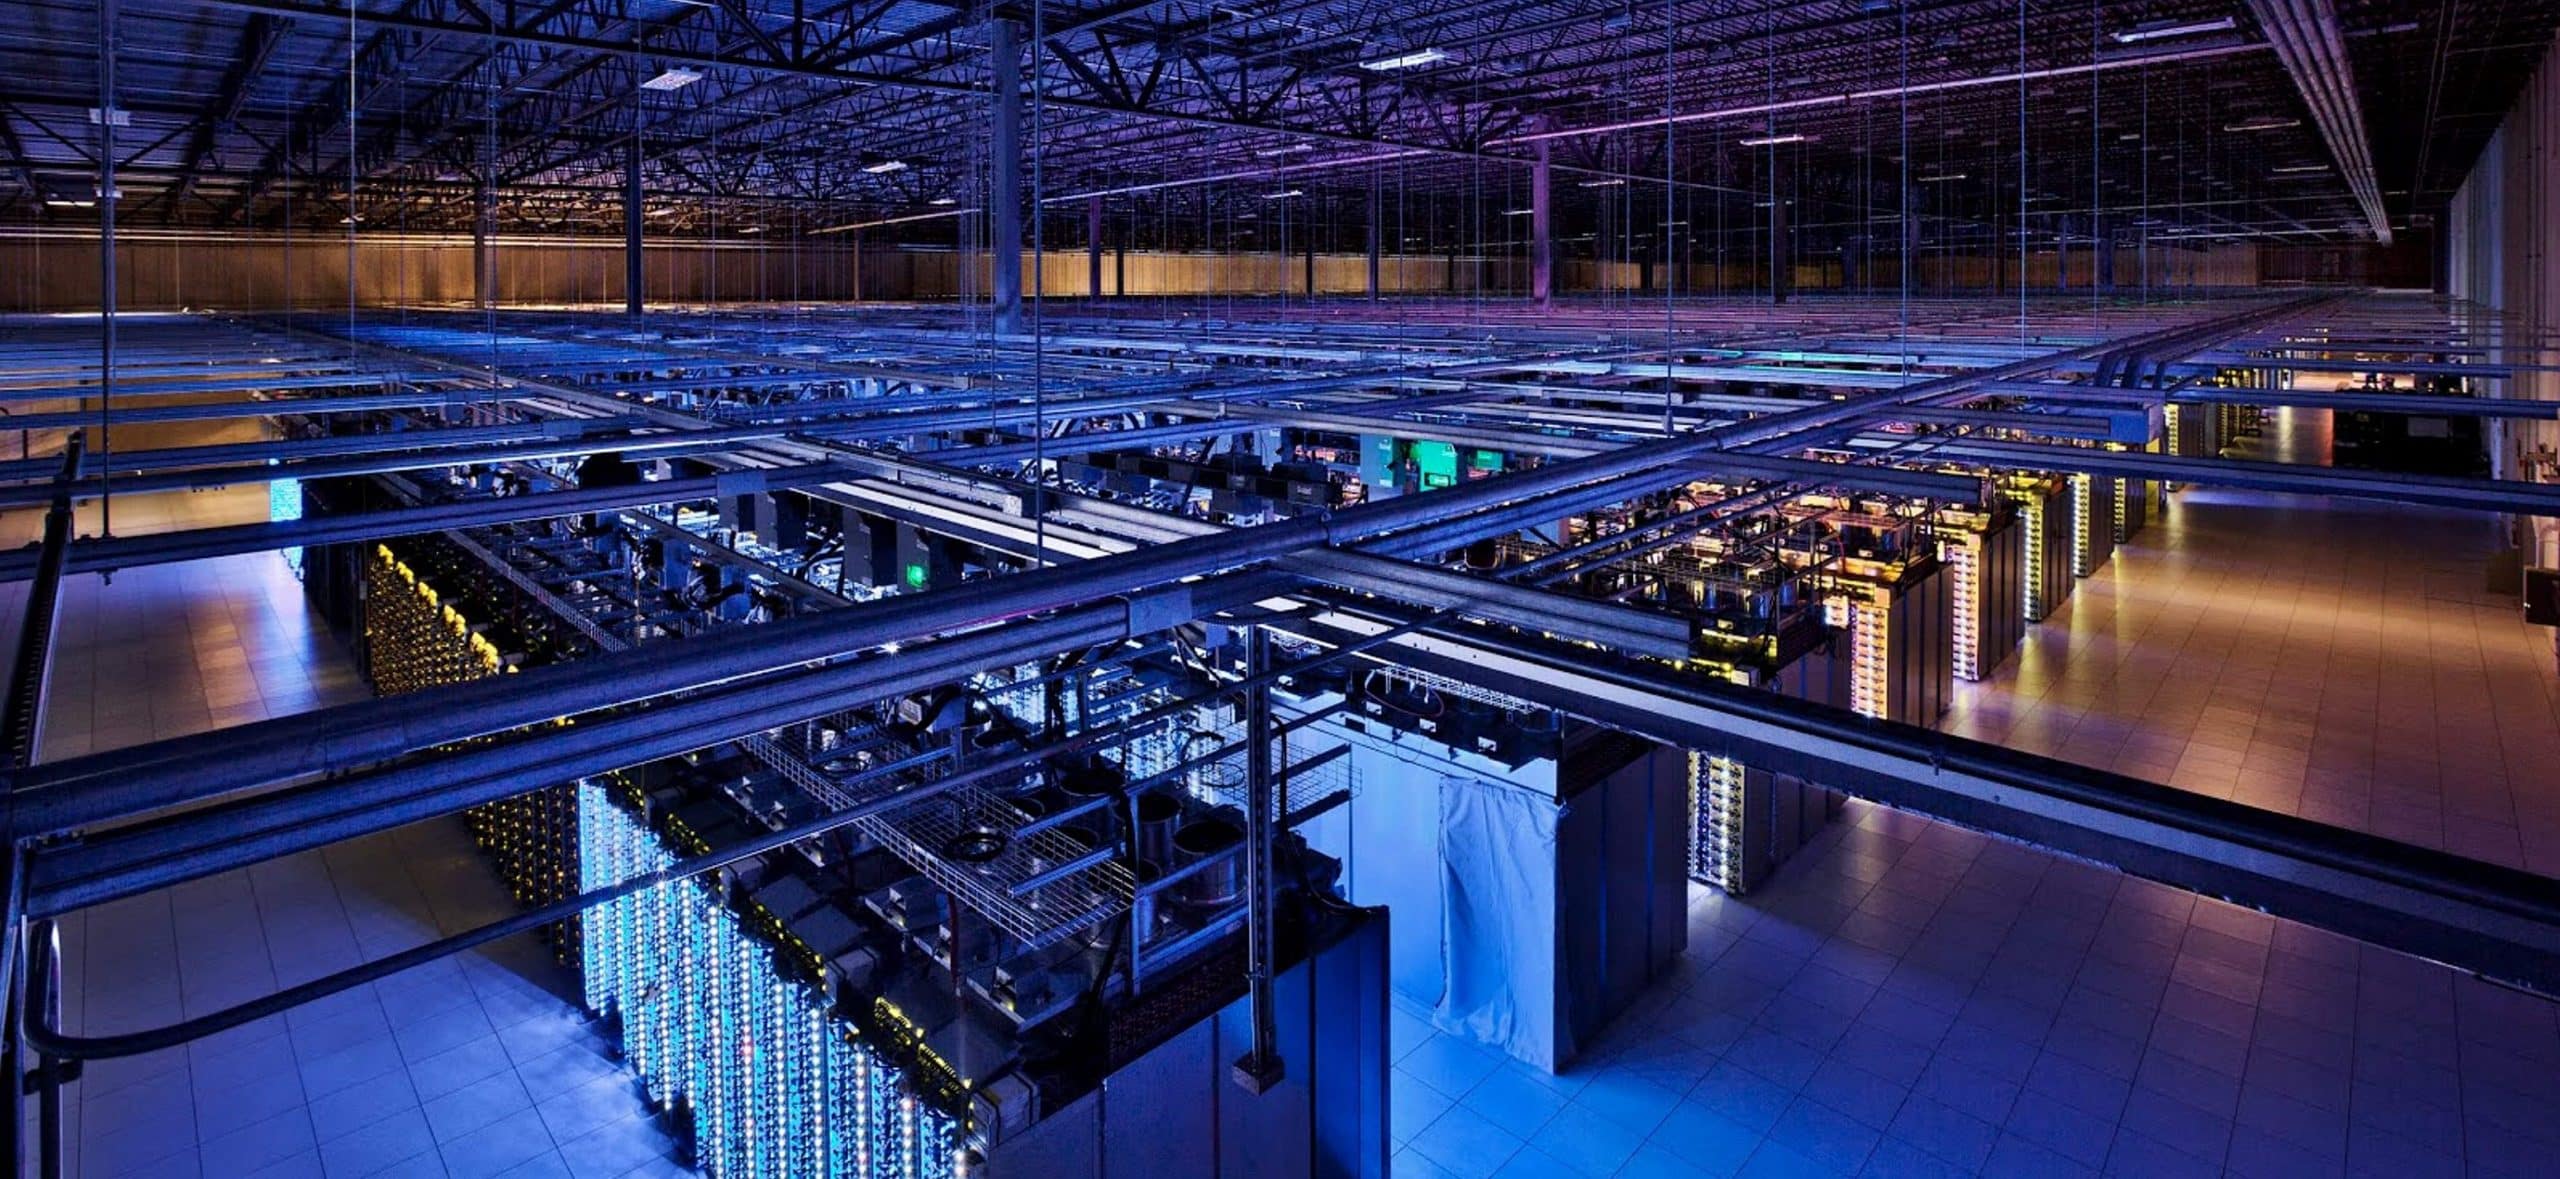 Google data center with servers